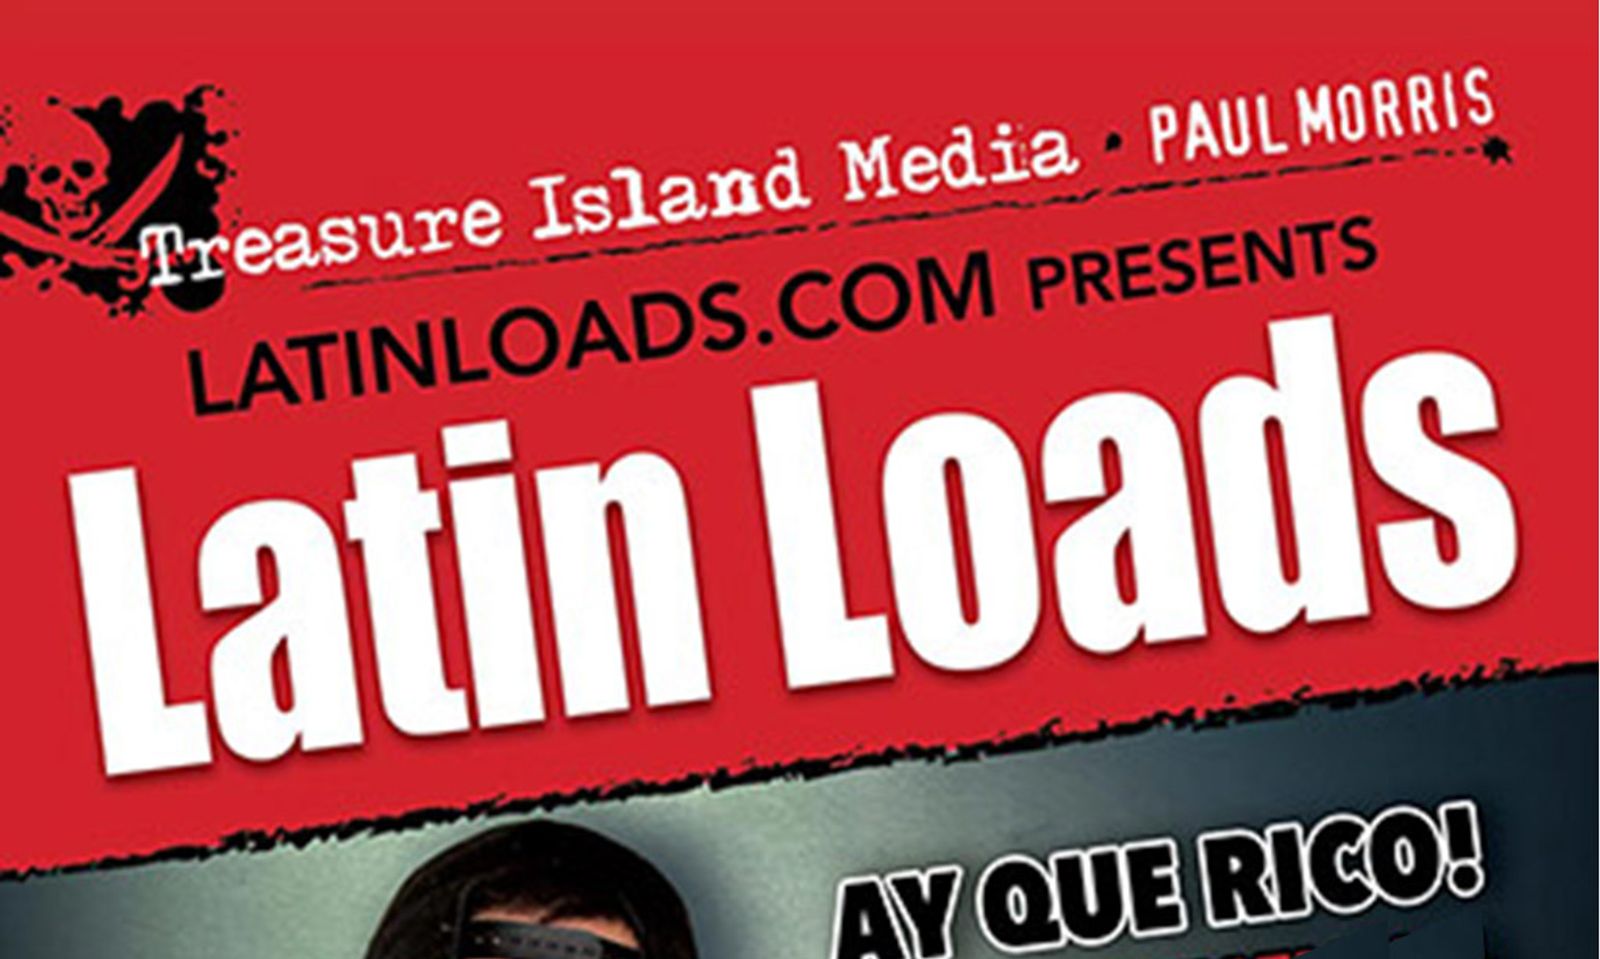 Treasure Island Media Releases 3rd Volume of 'Latin Loads'